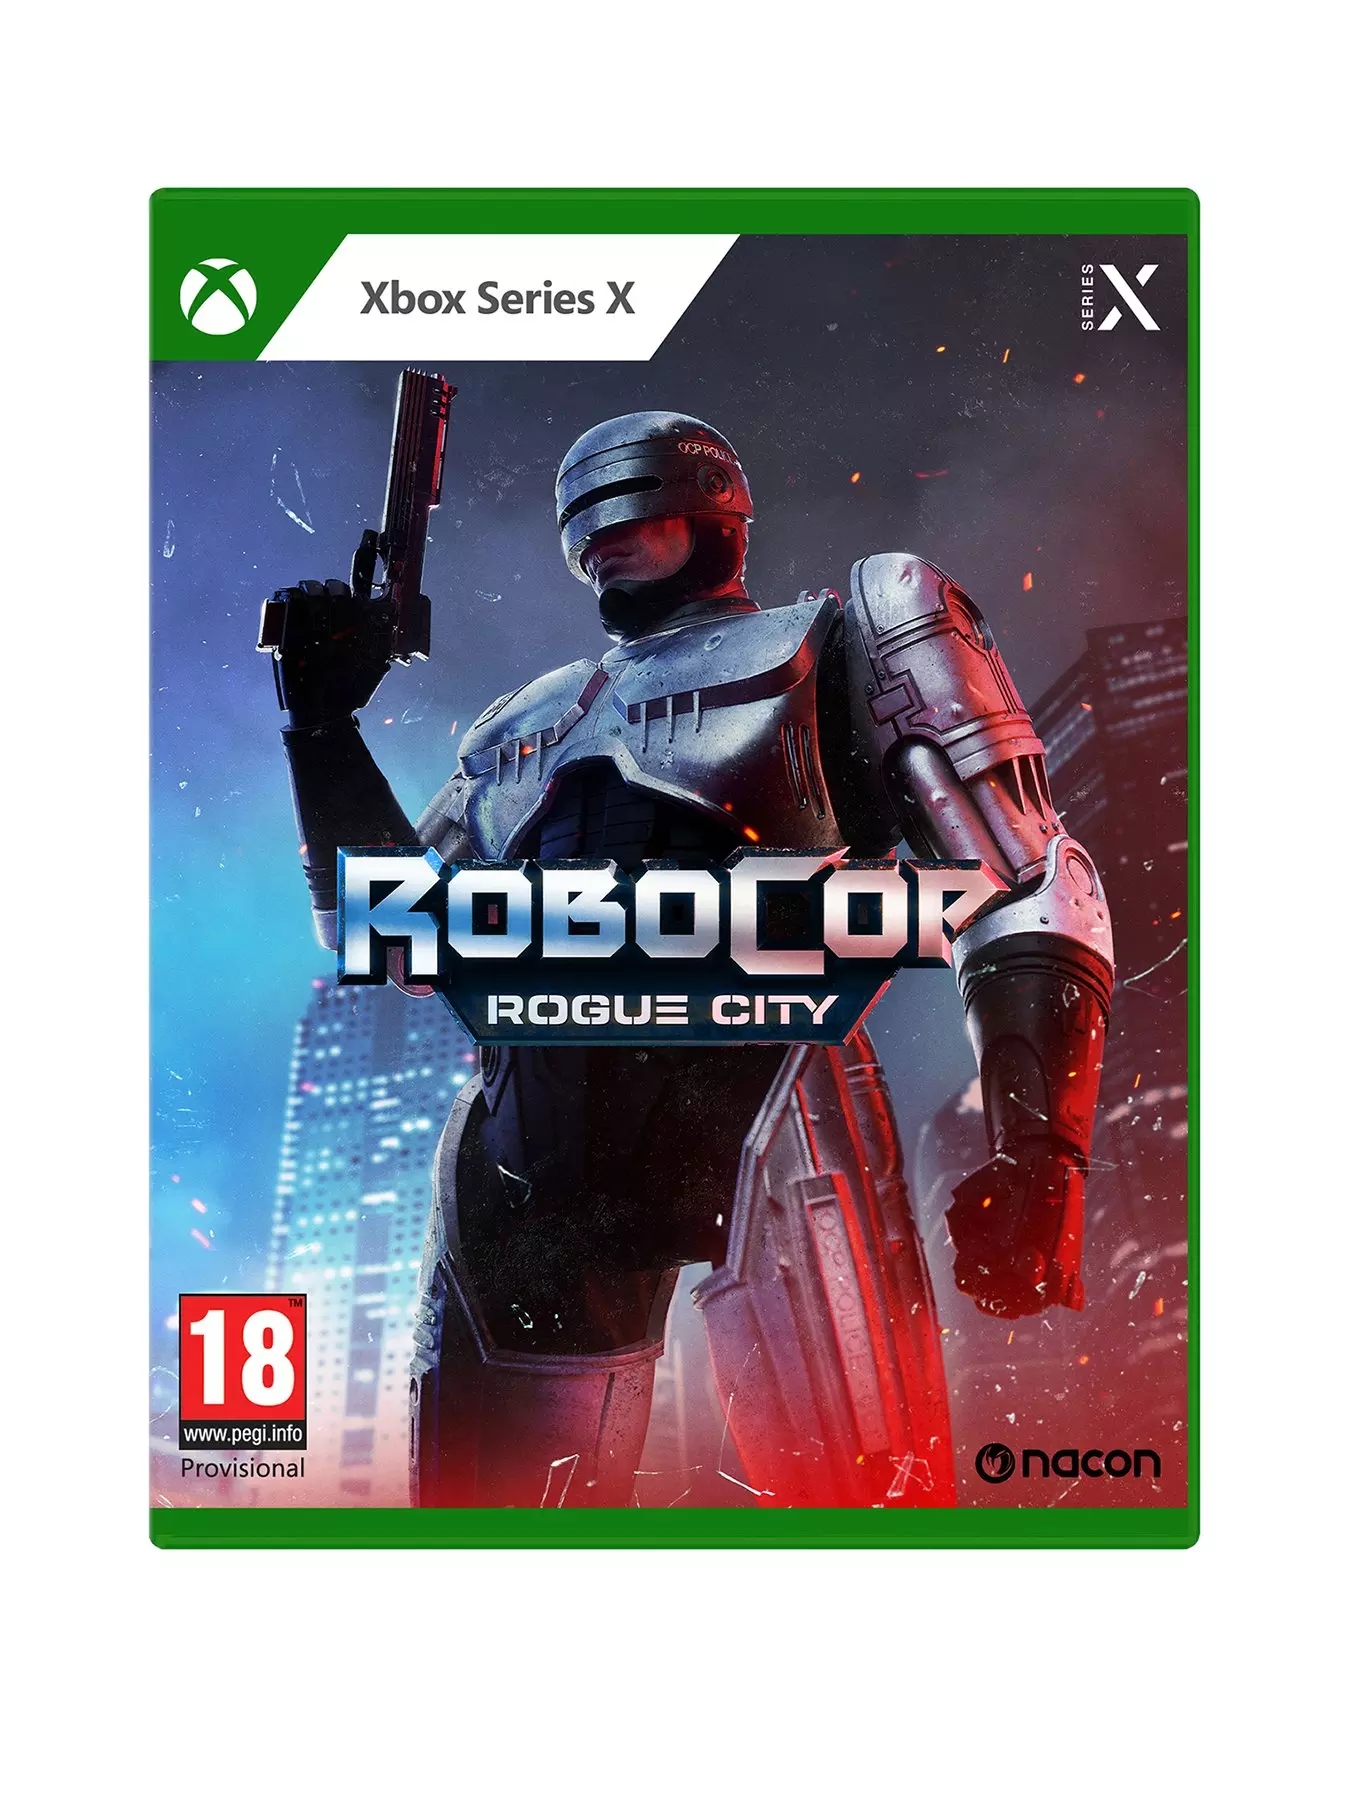 Buy RoboCop: Rogue City - Preorder Bonus (PS5) - PSN Key - EUROPE - Cheap -  !